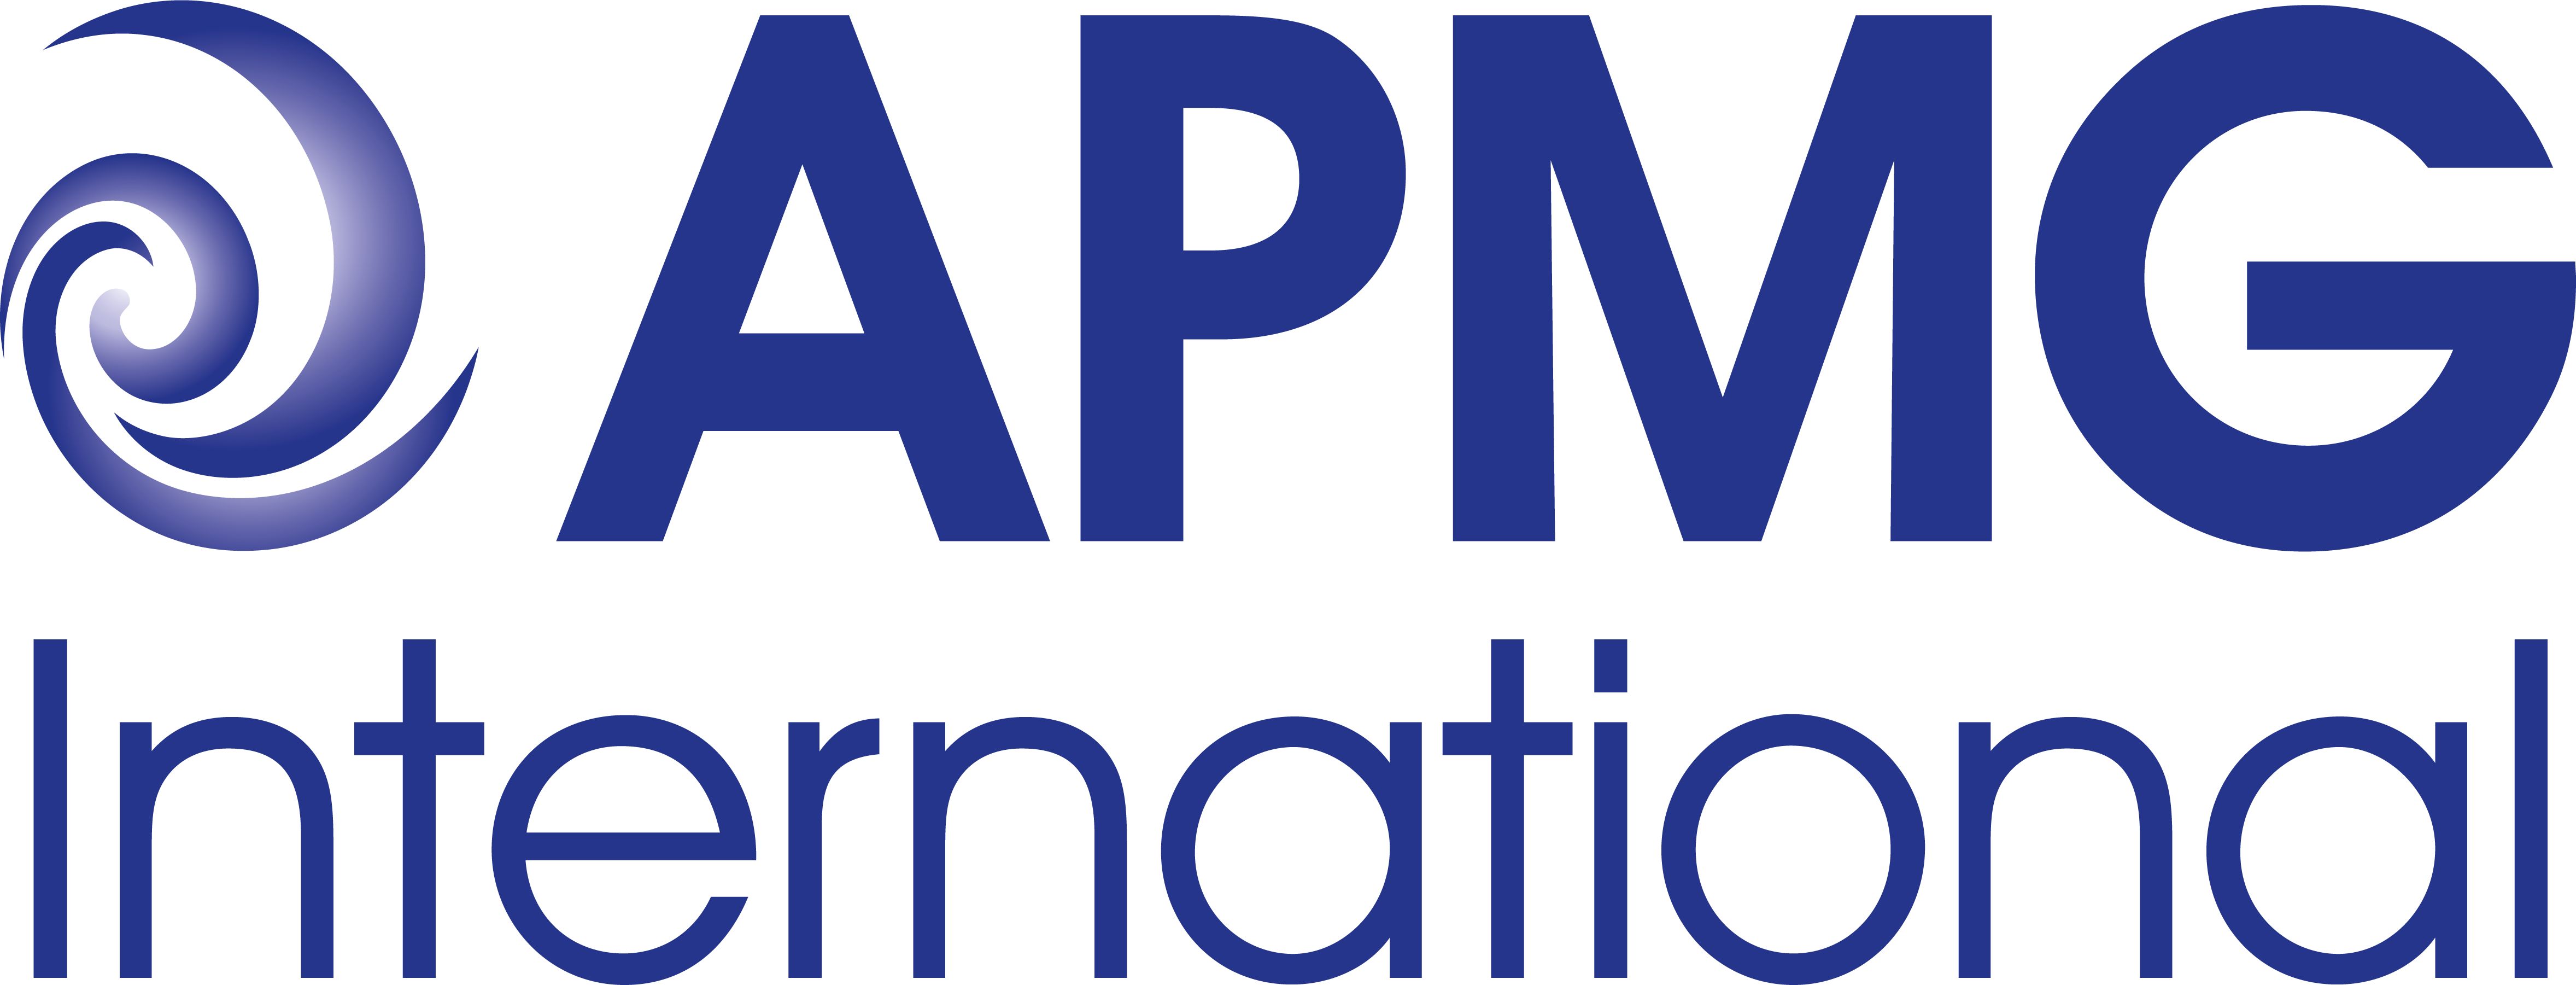 APMG International logo